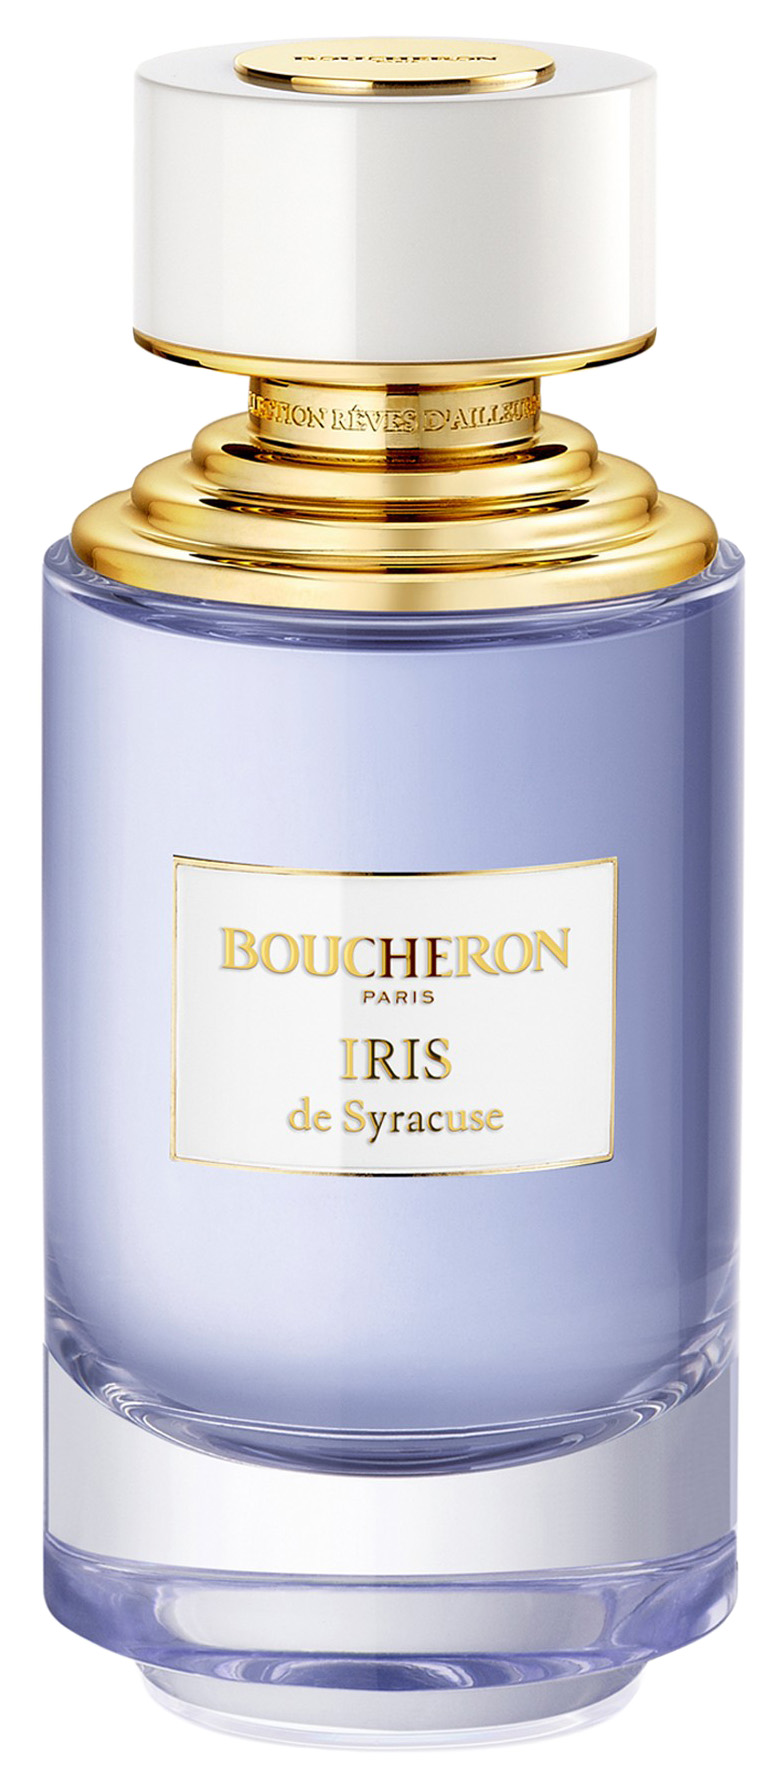 Boucheron iris de. Бушерон духи Ирис. Boucheron collection Iris de Syracuse 125 ml EDP. Boucheron Парфюм с пачули. Бушерон Ирис де Сиракуз.